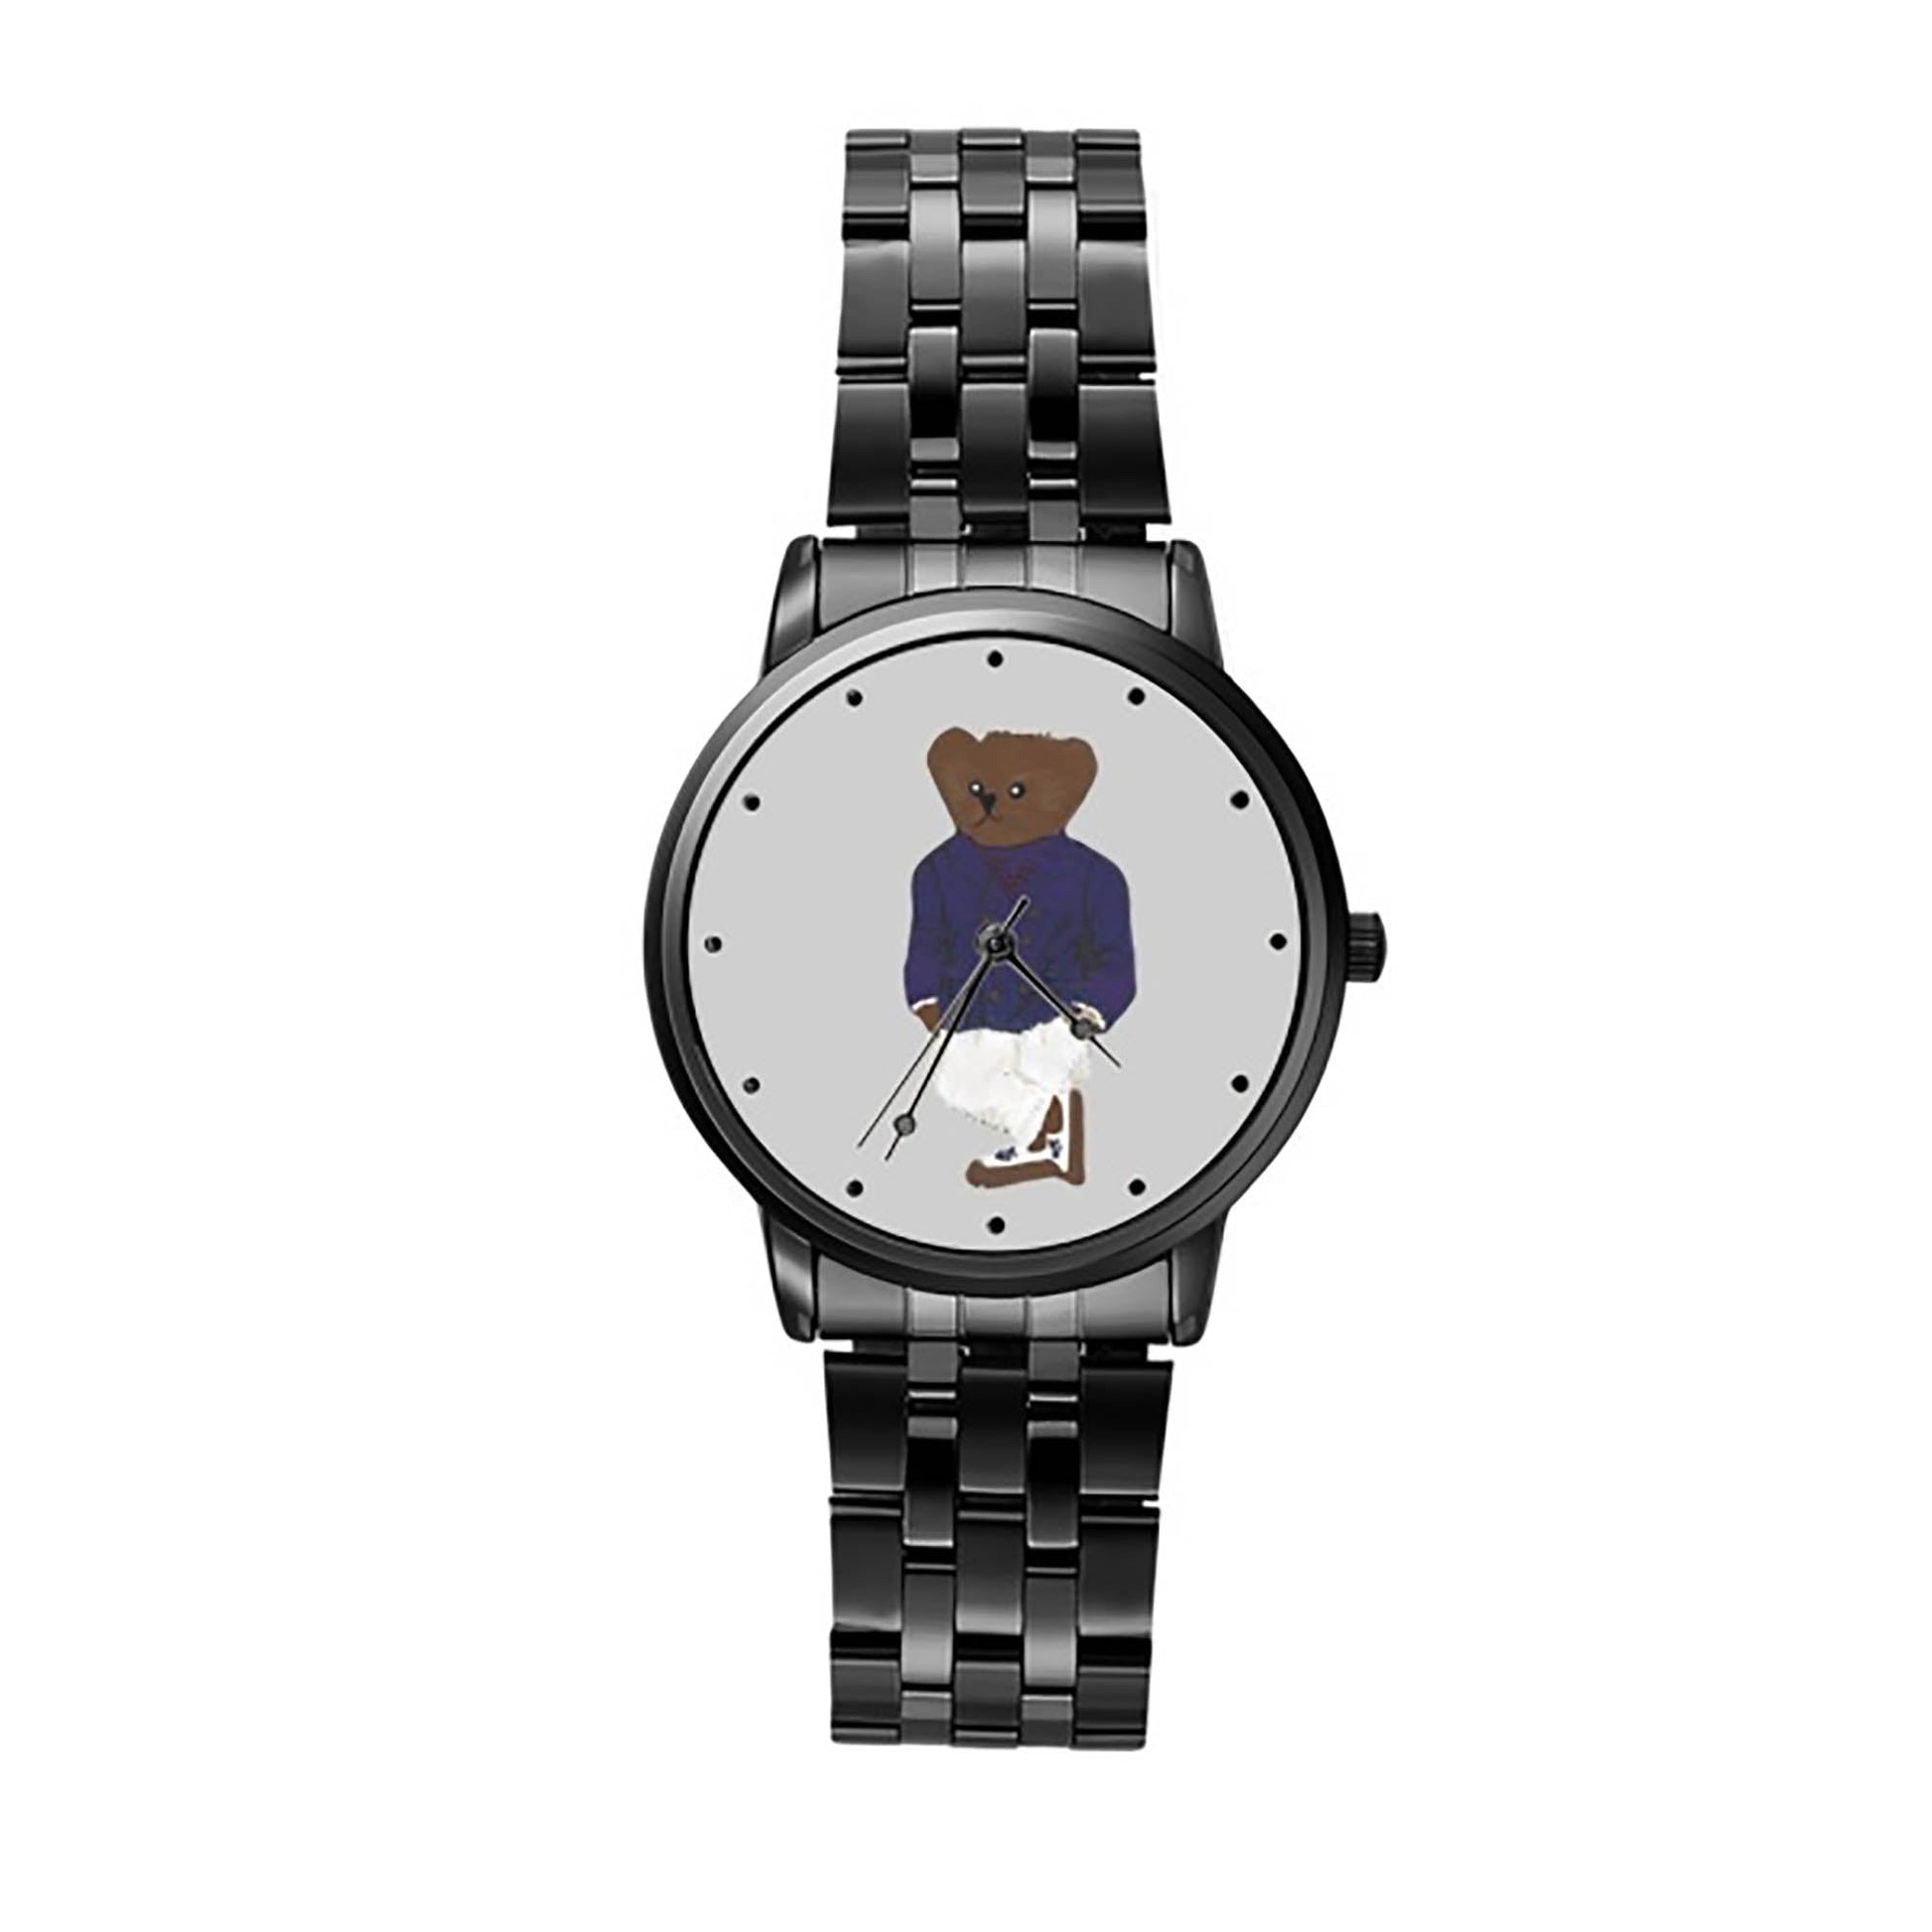 Polo Bear elegance by Ralph Lauren Sport Metal Watch ST99